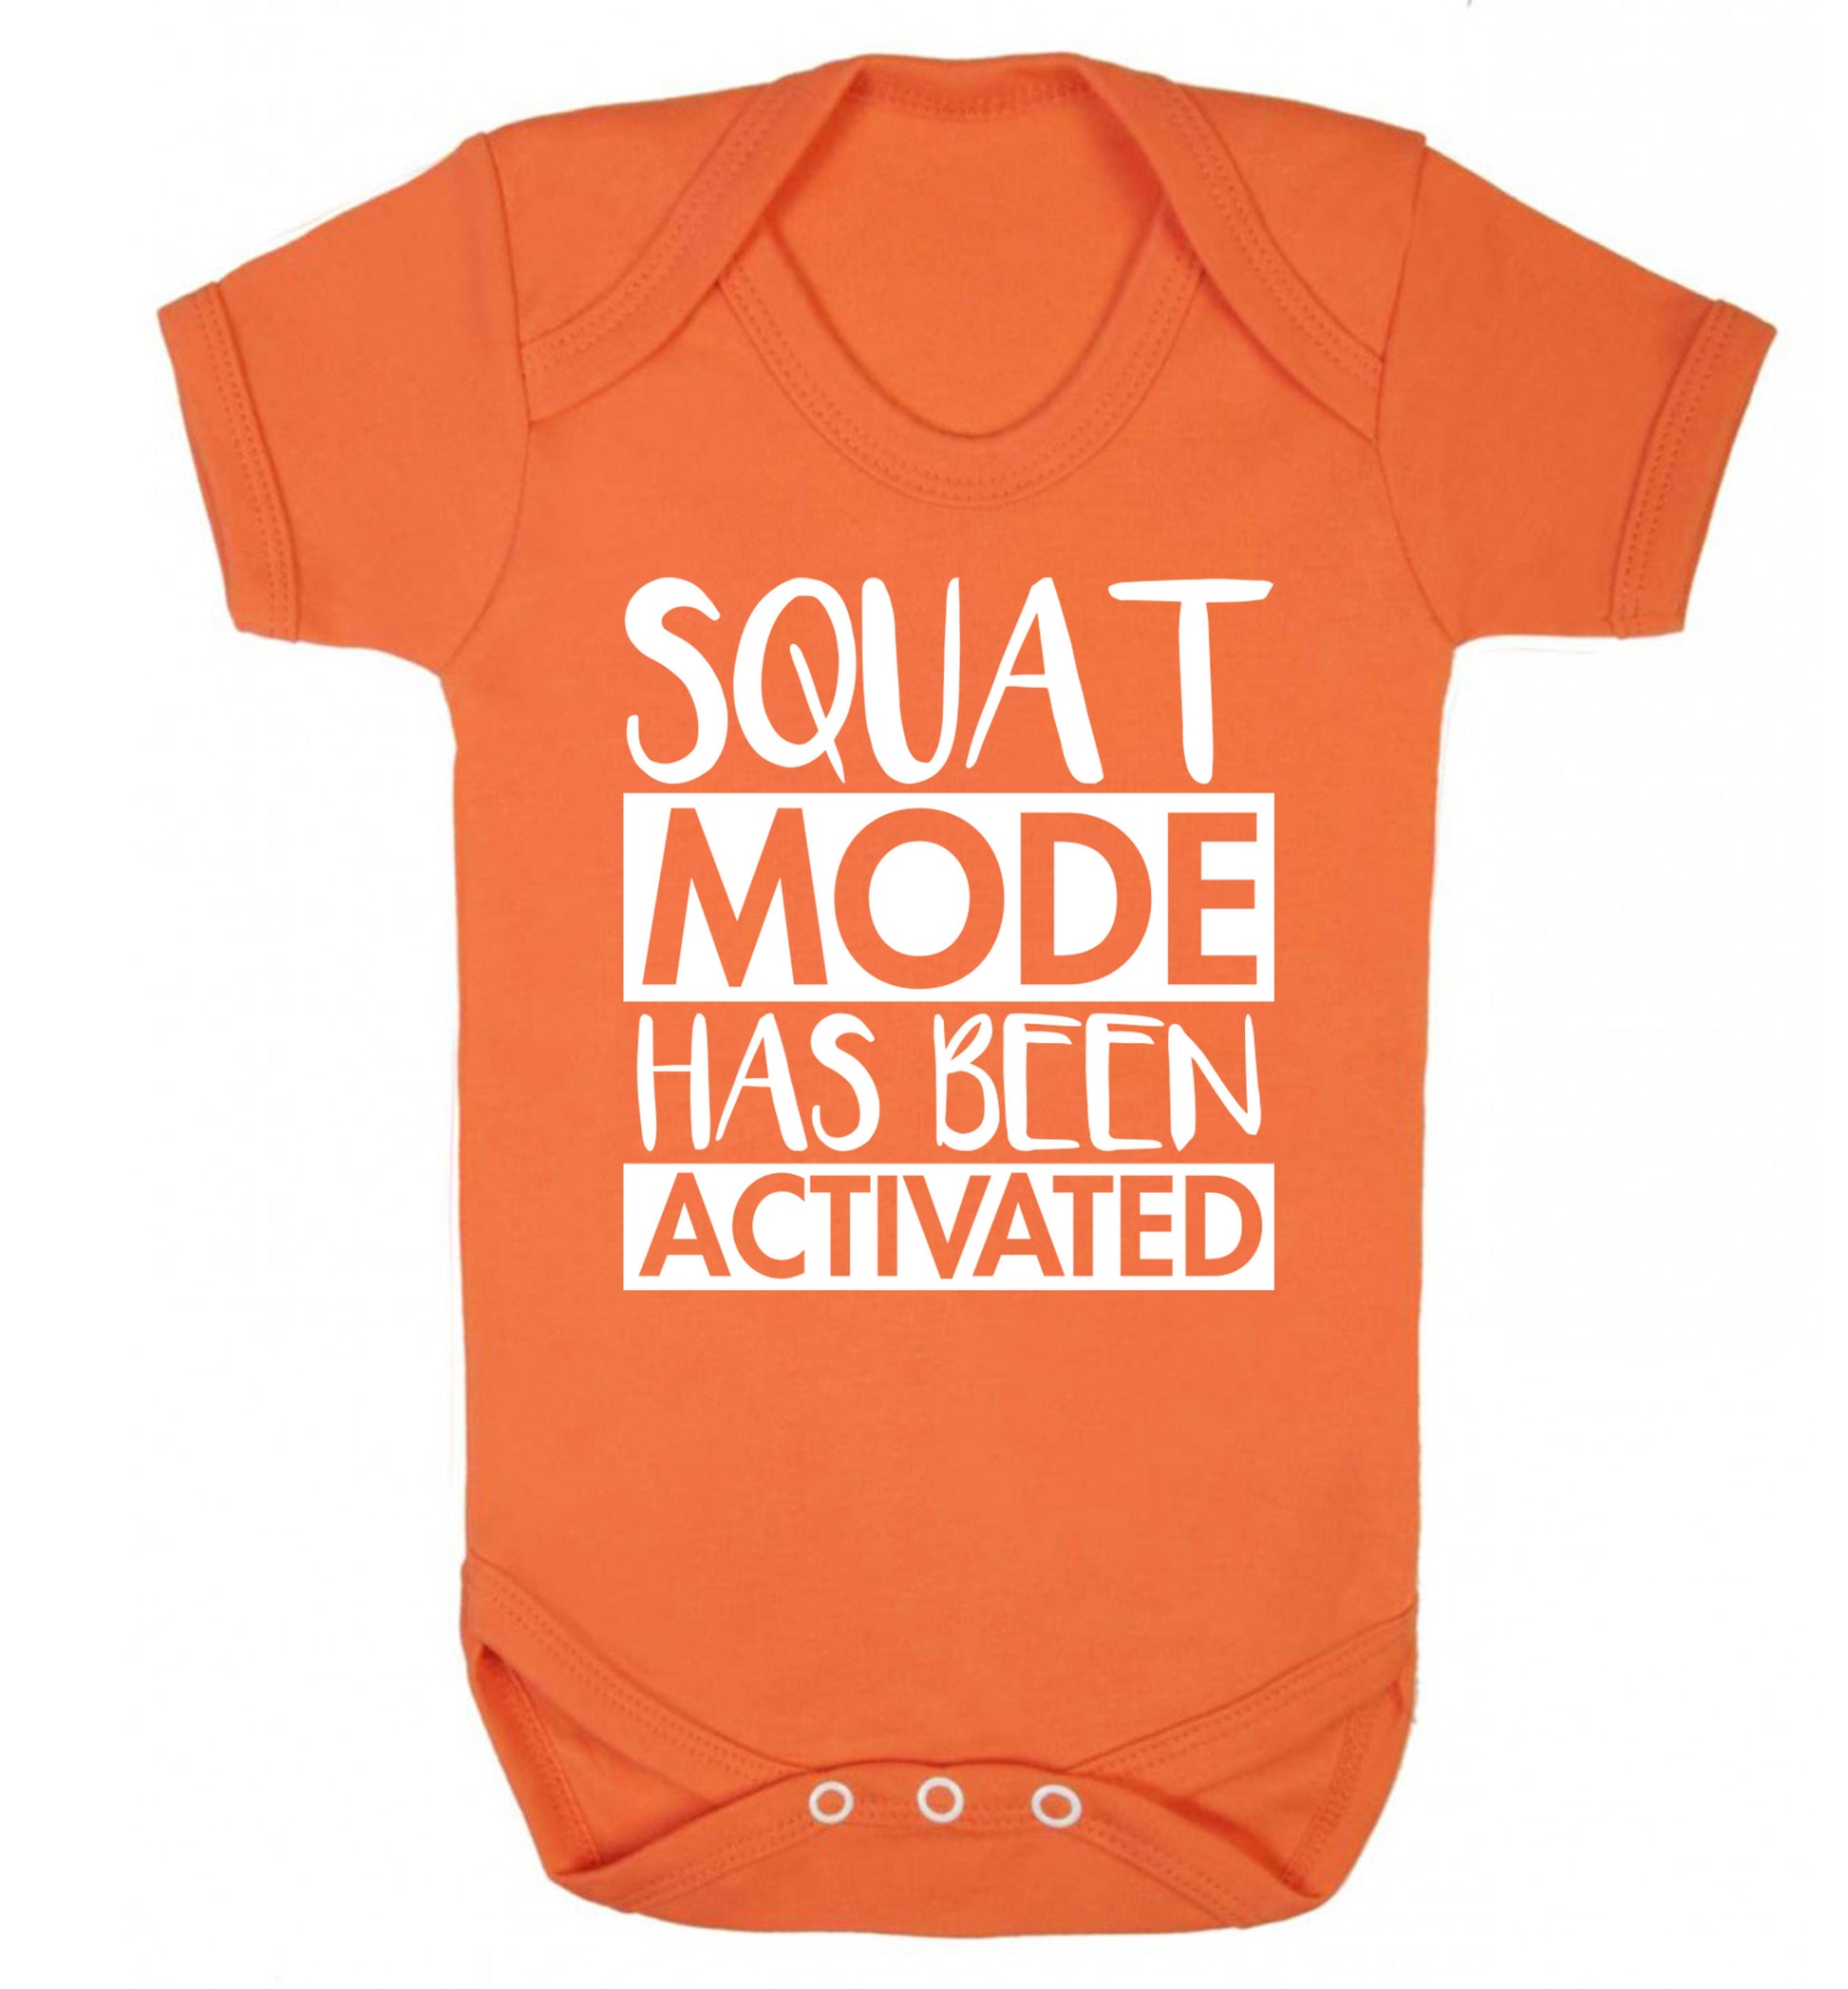 Squat mode activated Baby Vest orange 18-24 months